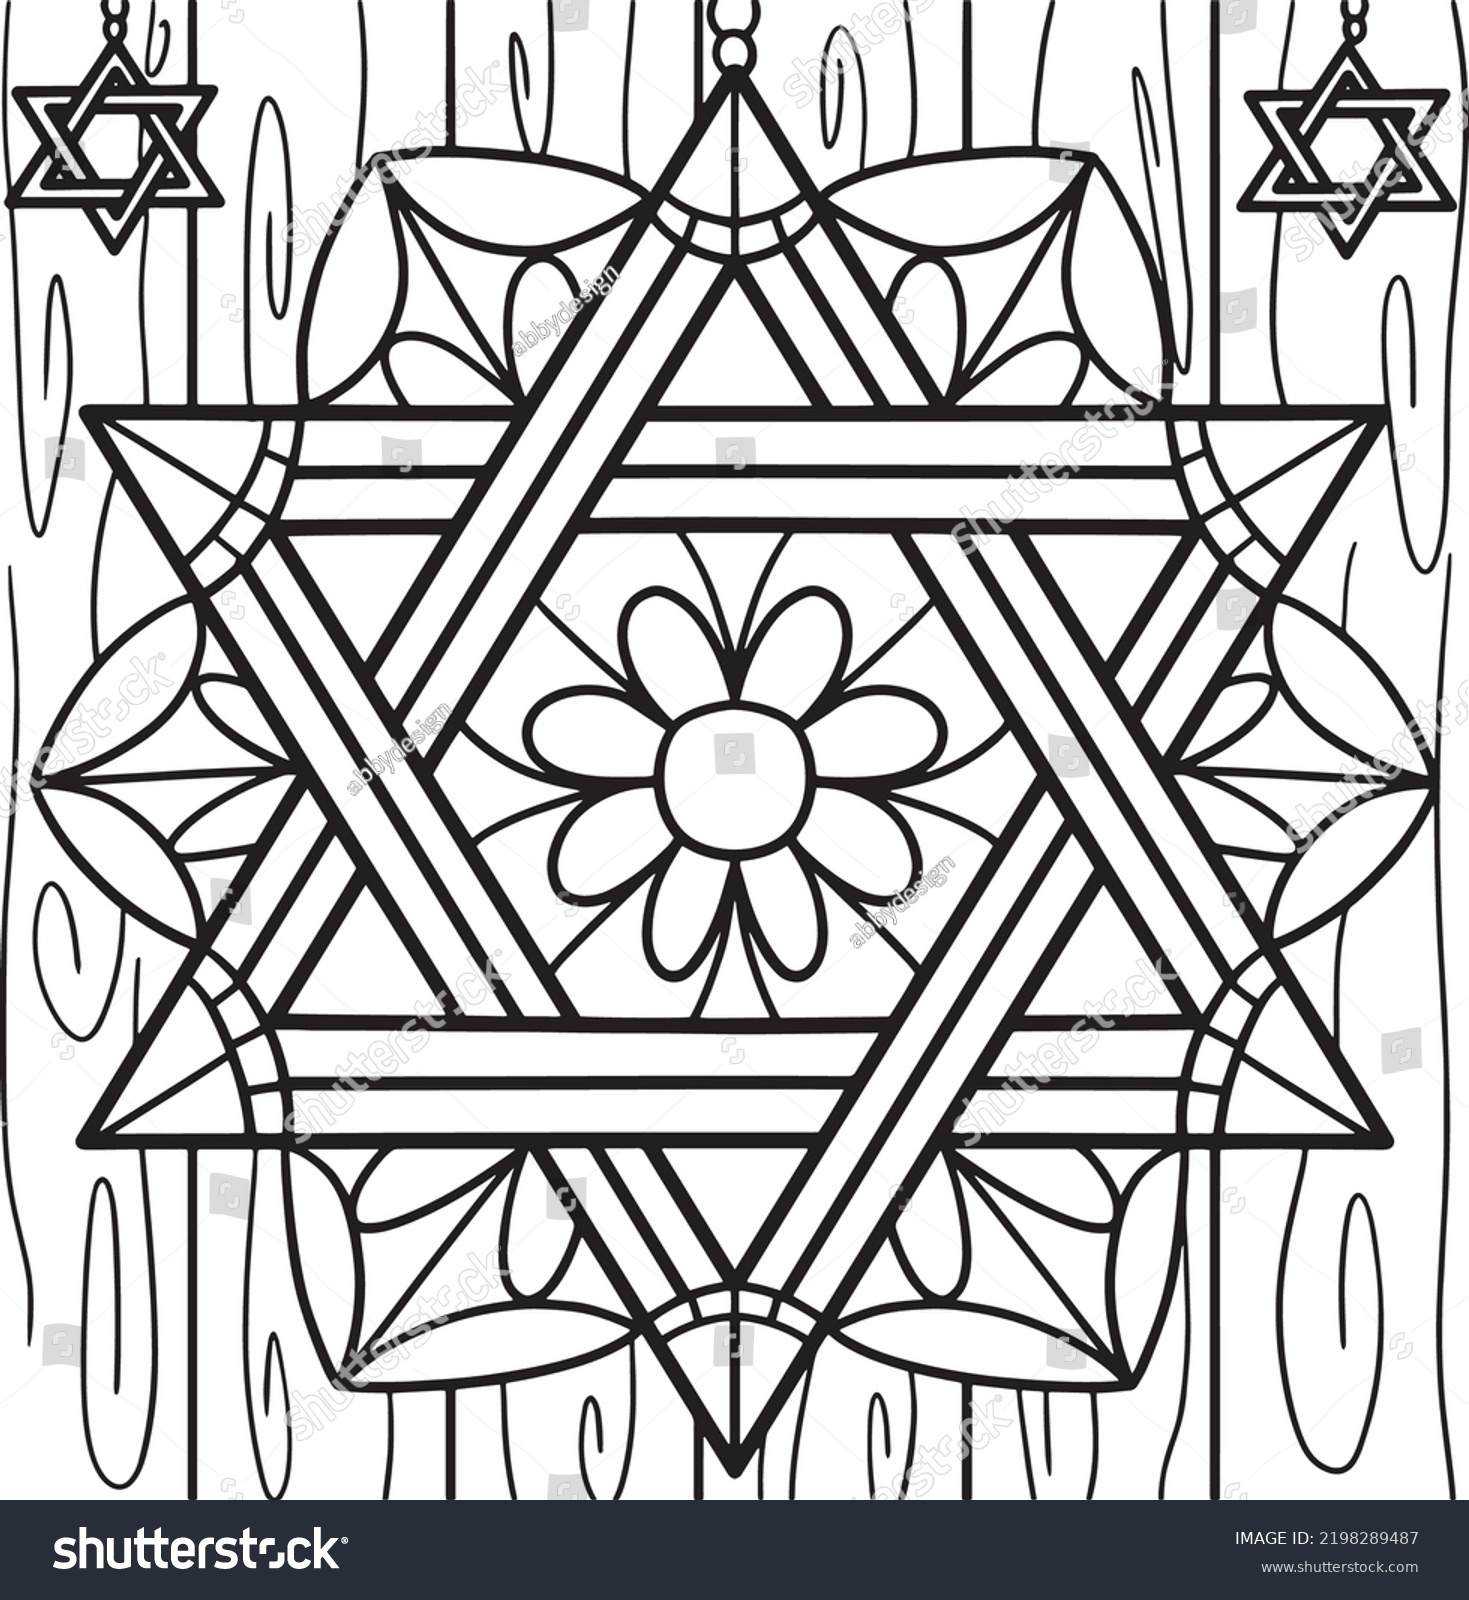 Hanukkah star david coloring page kids stock vector royalty free